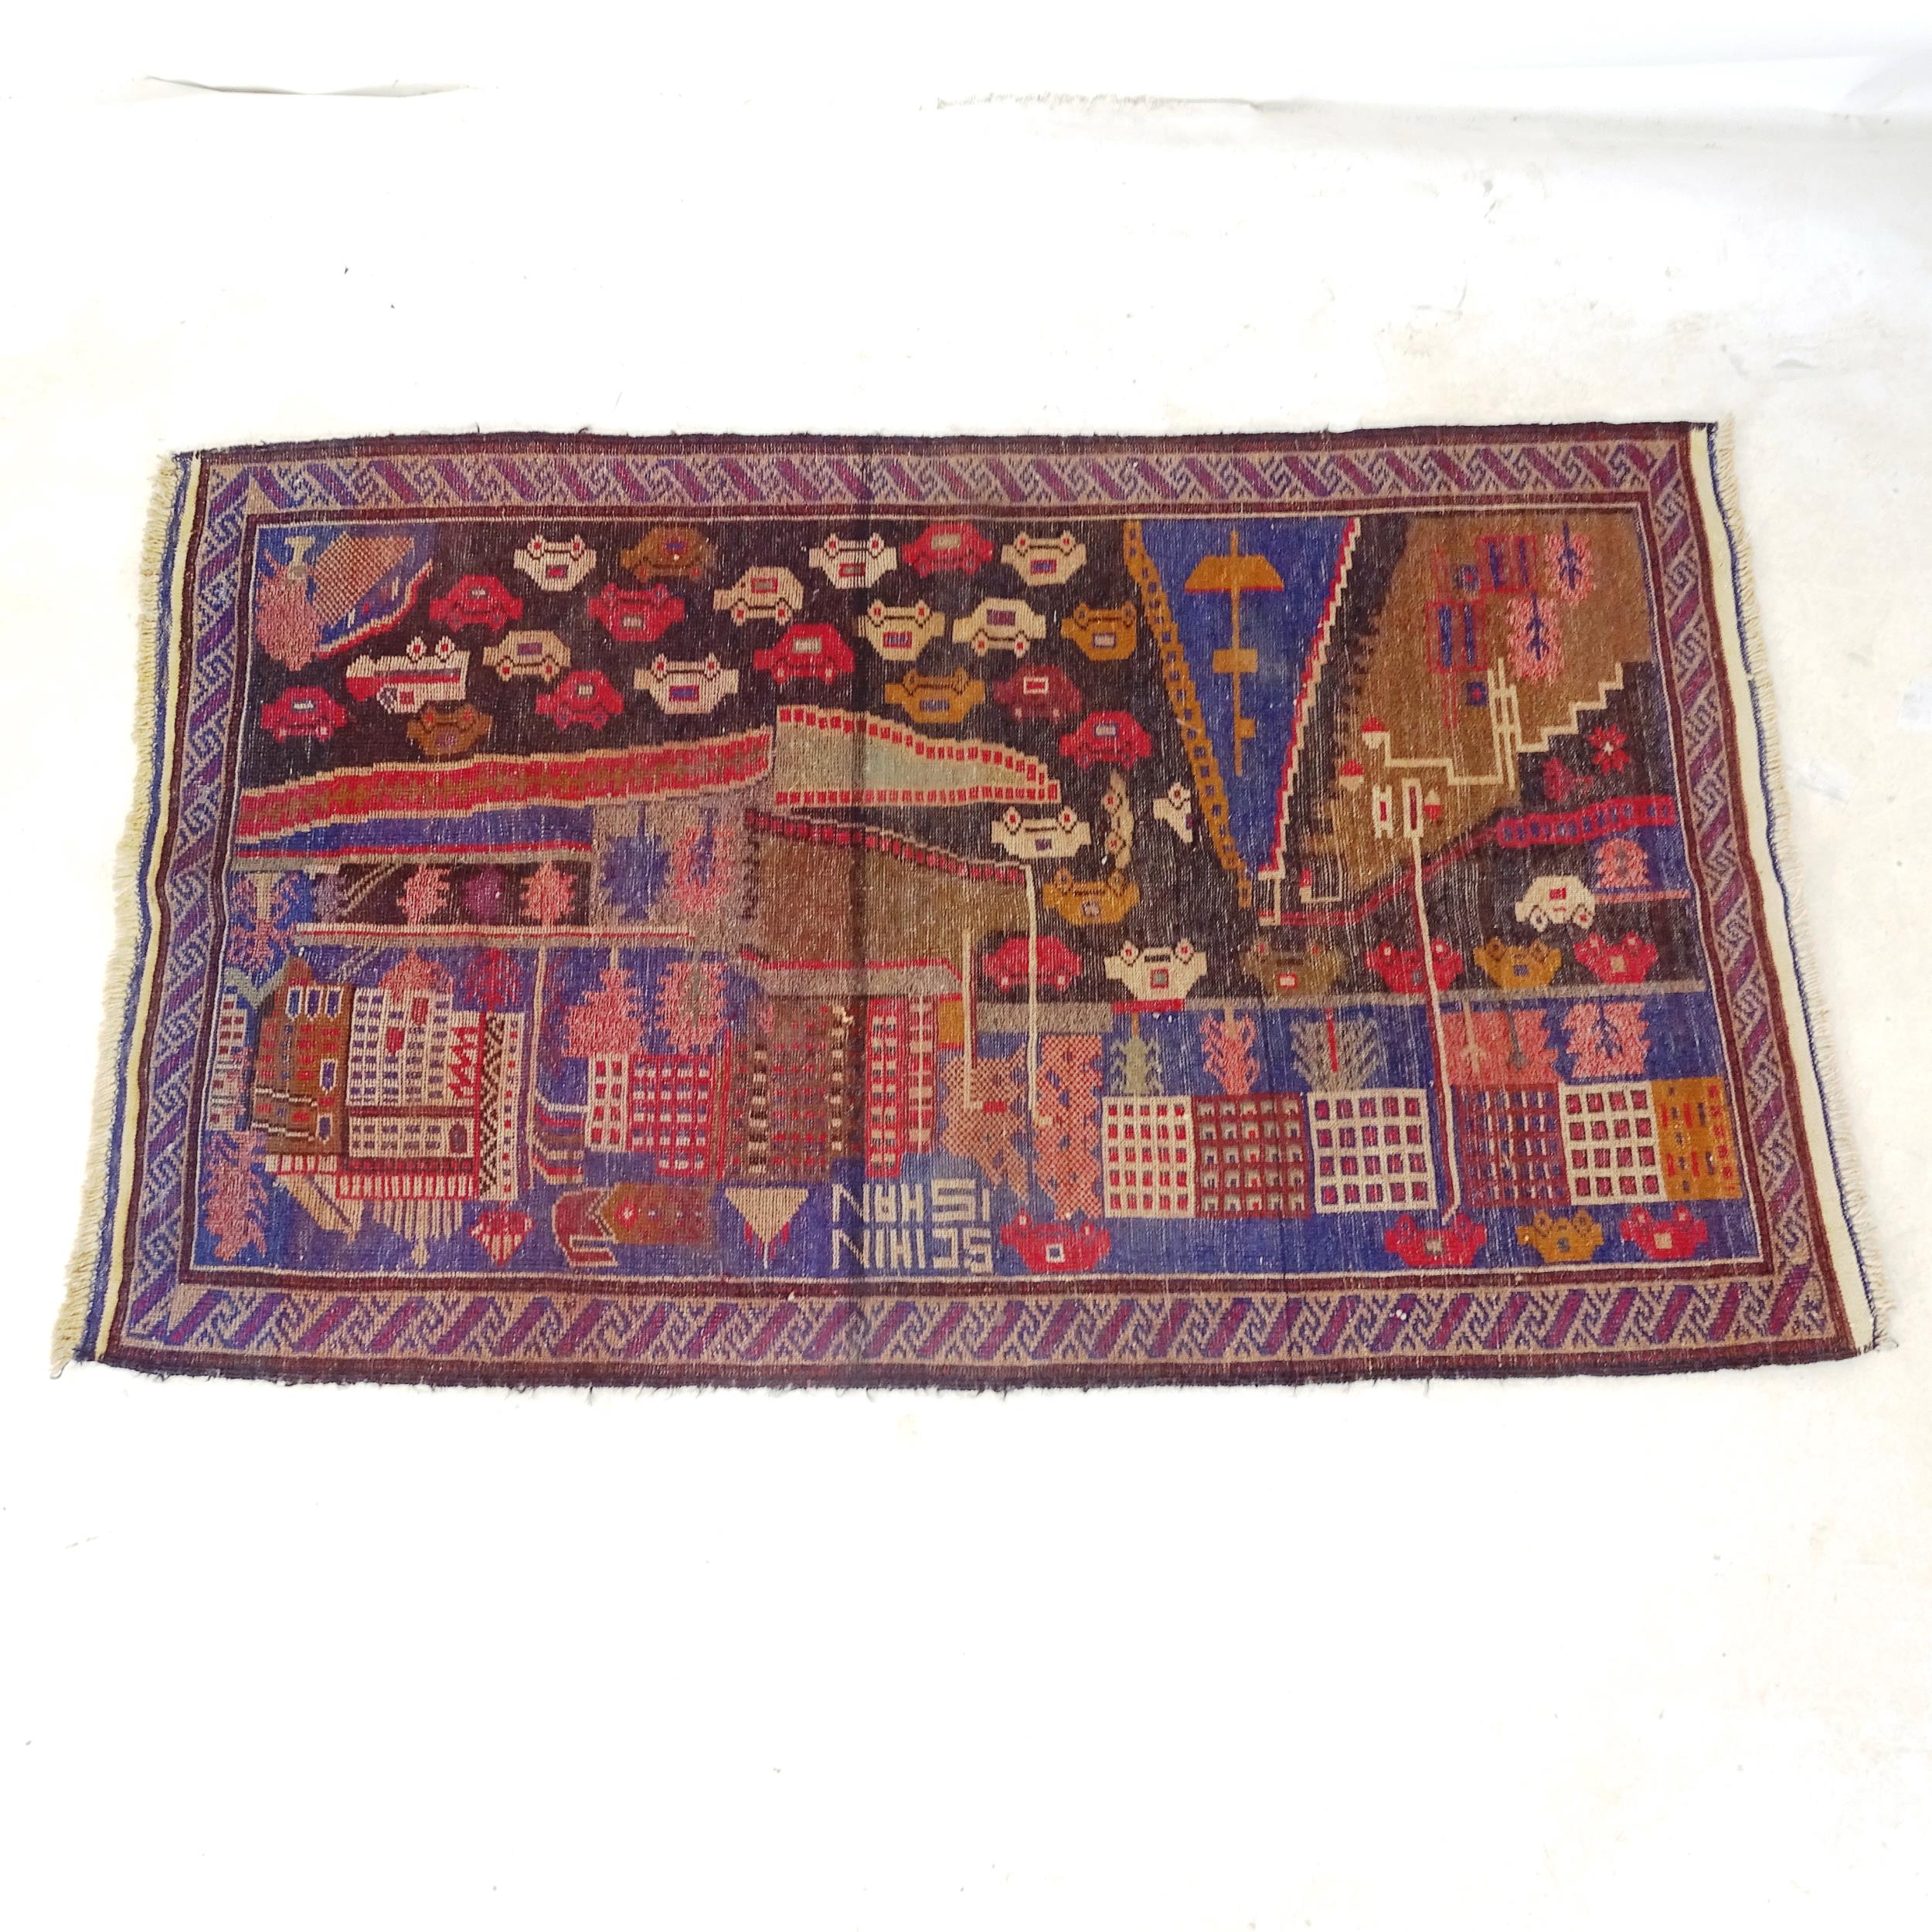 A red ground Beluchi rug, 147cm x 91cm - Image 2 of 2